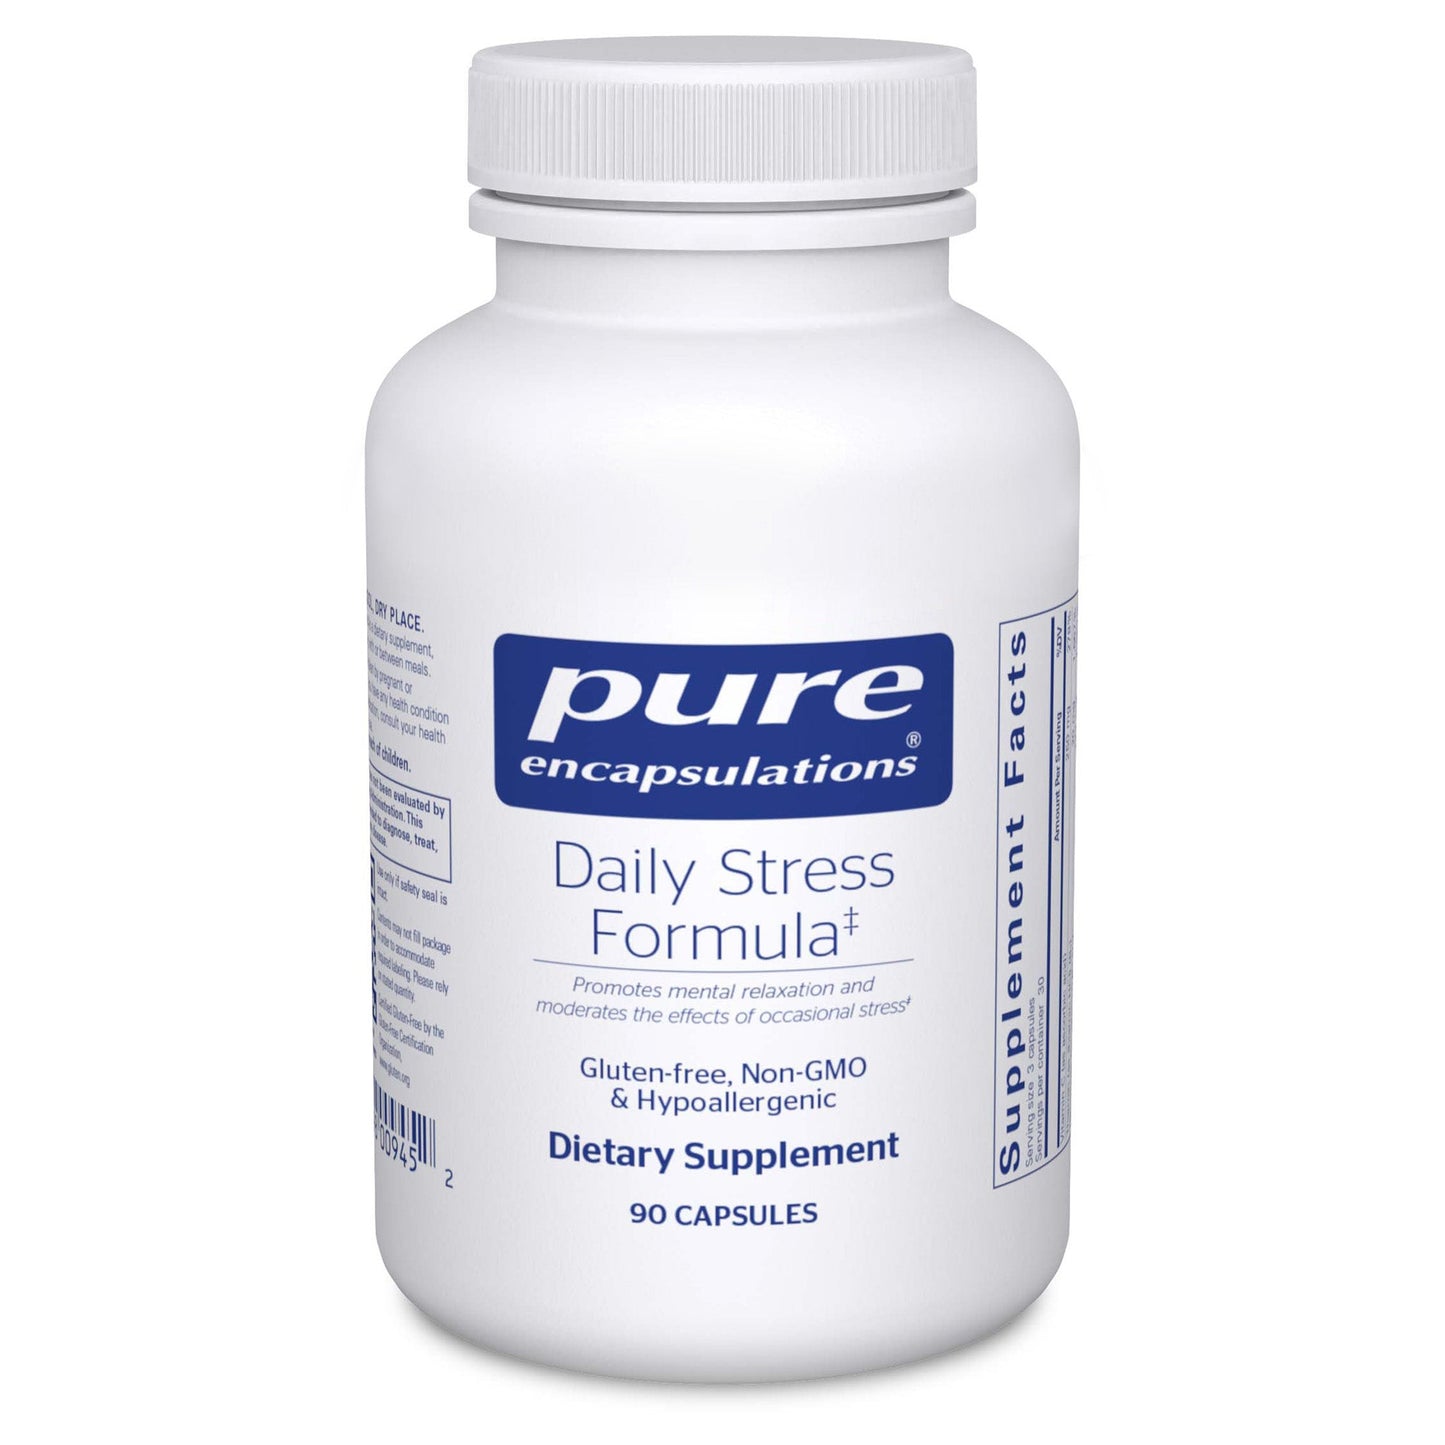 Daily Stress Formula‡